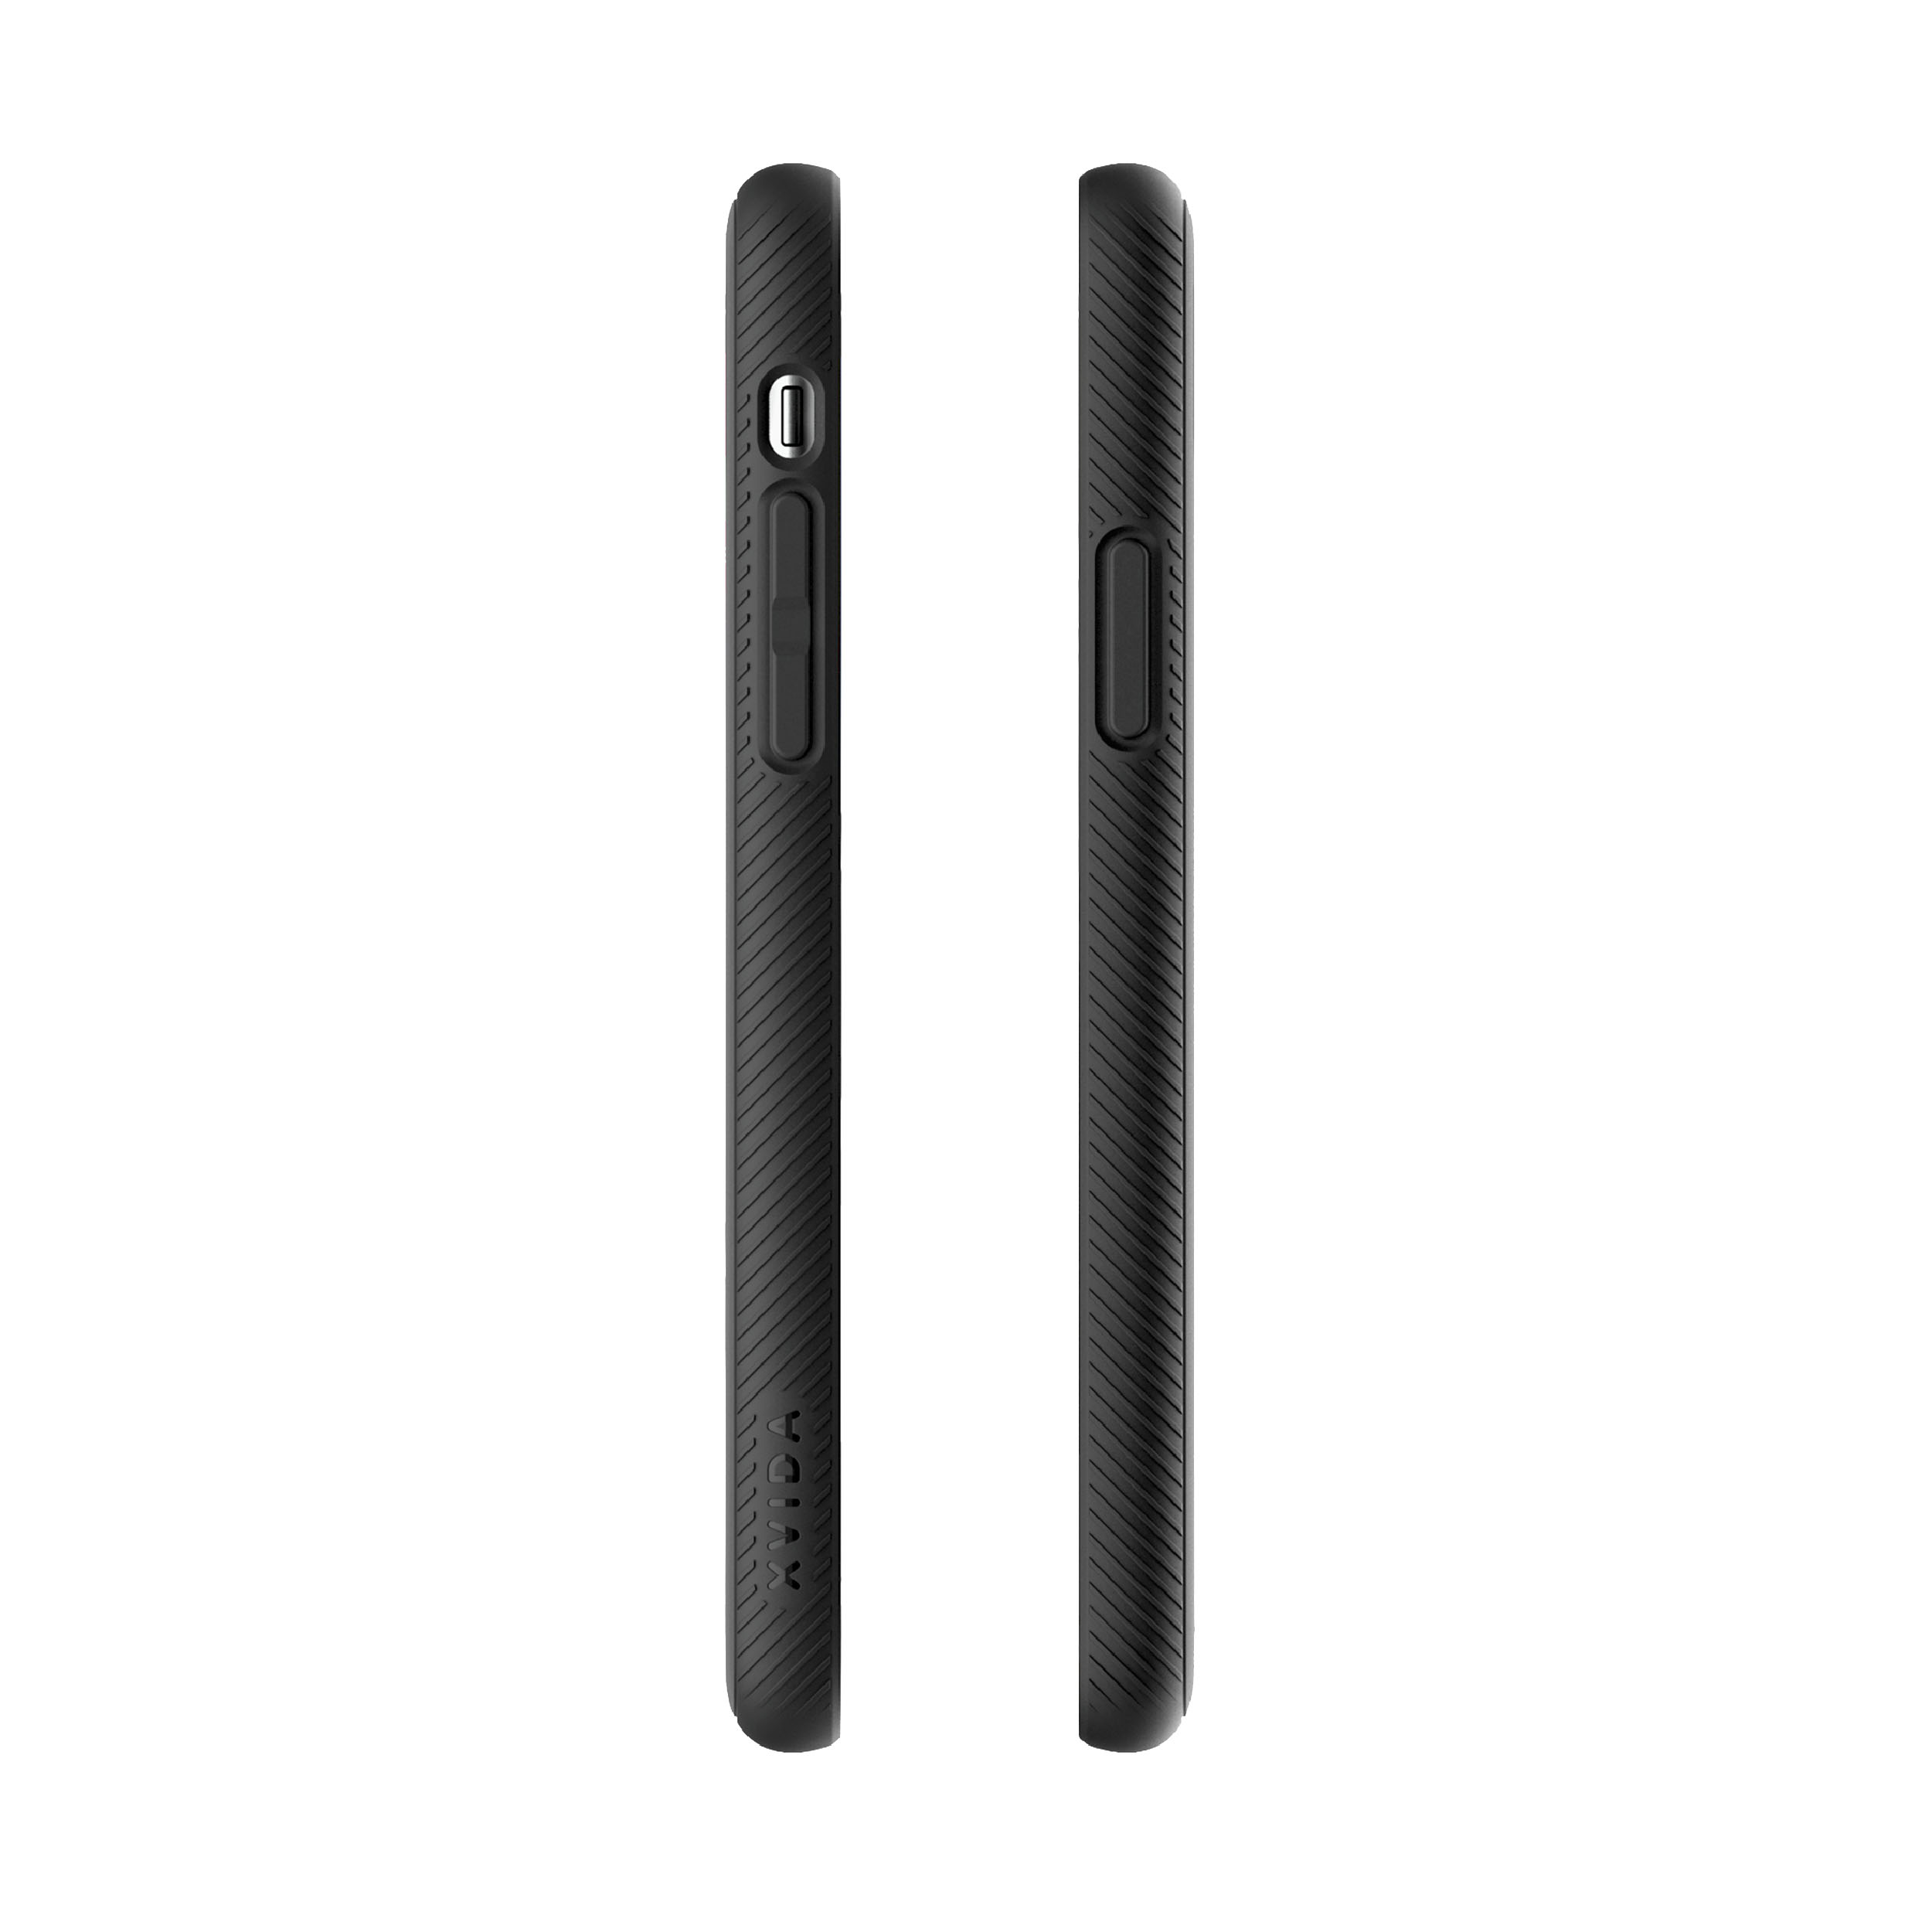 Magnetic Wireless Case iPhone 8 Plus Schutzhülle